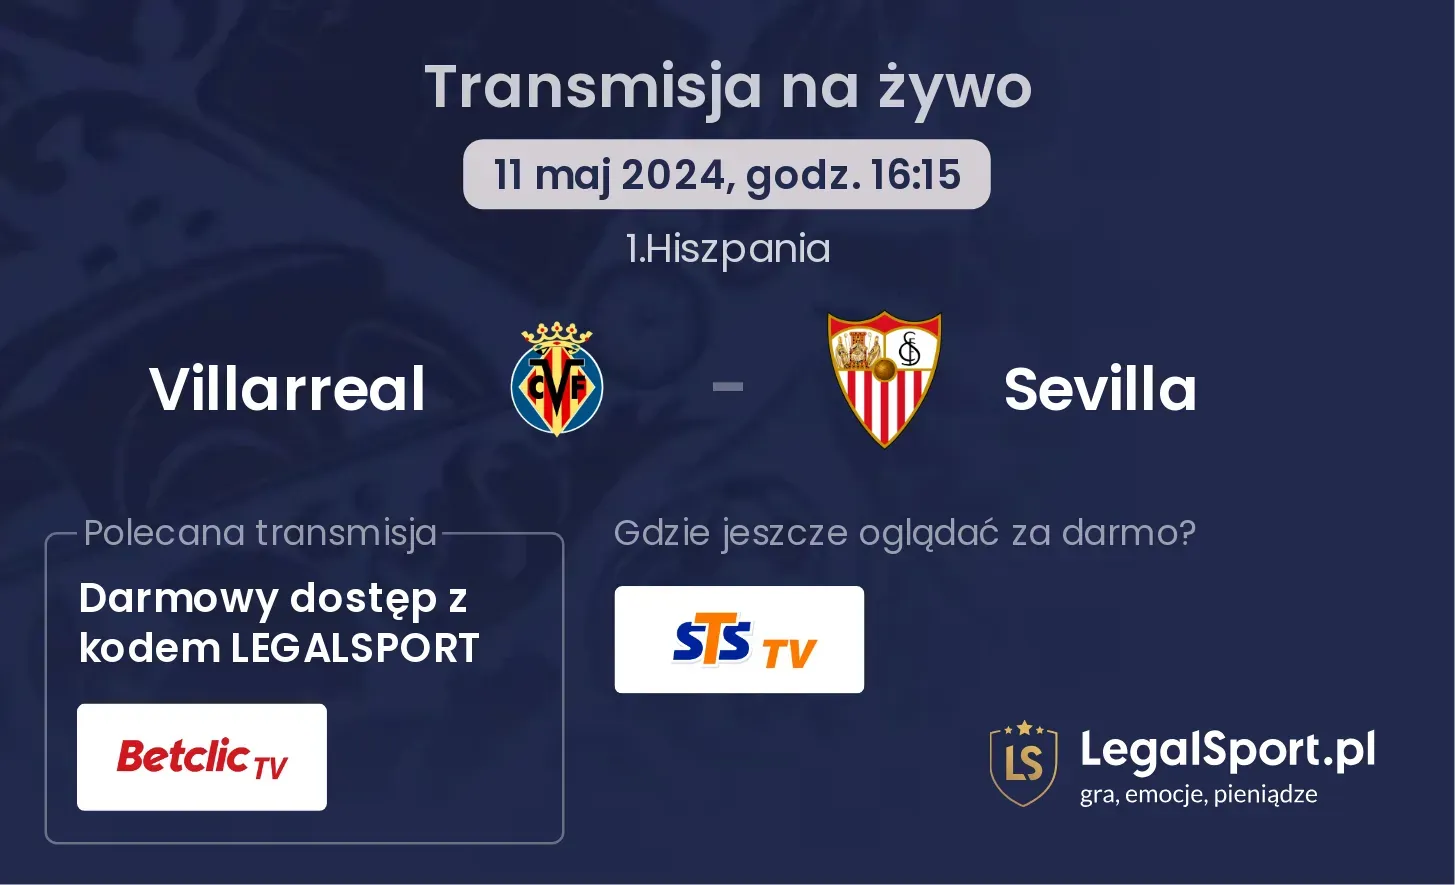 Villarreal - Sevilla transmisja na żywo